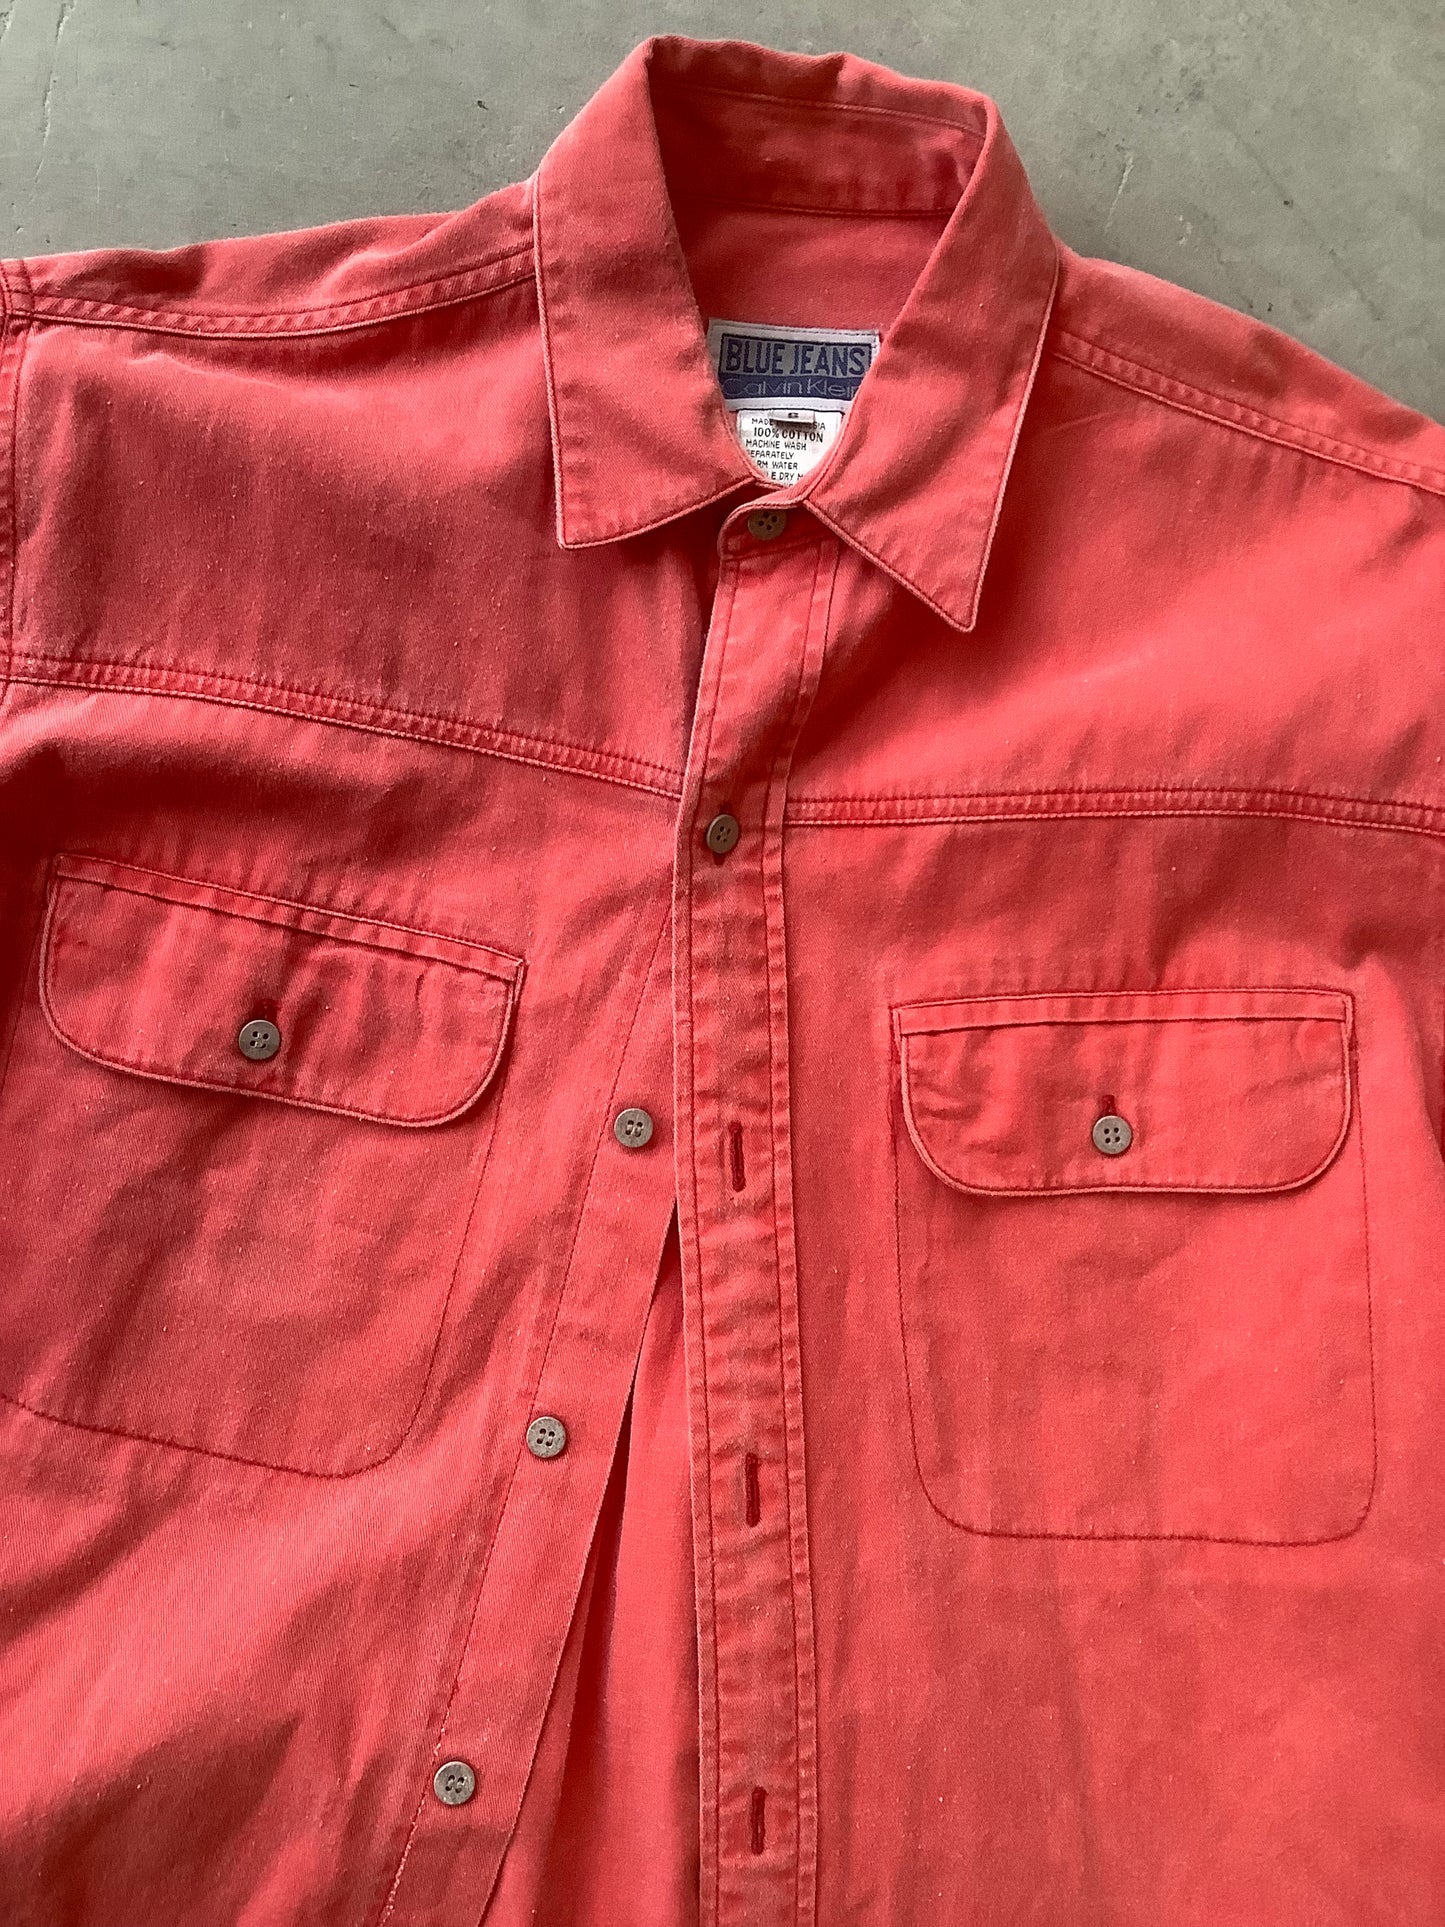 Red work shirt